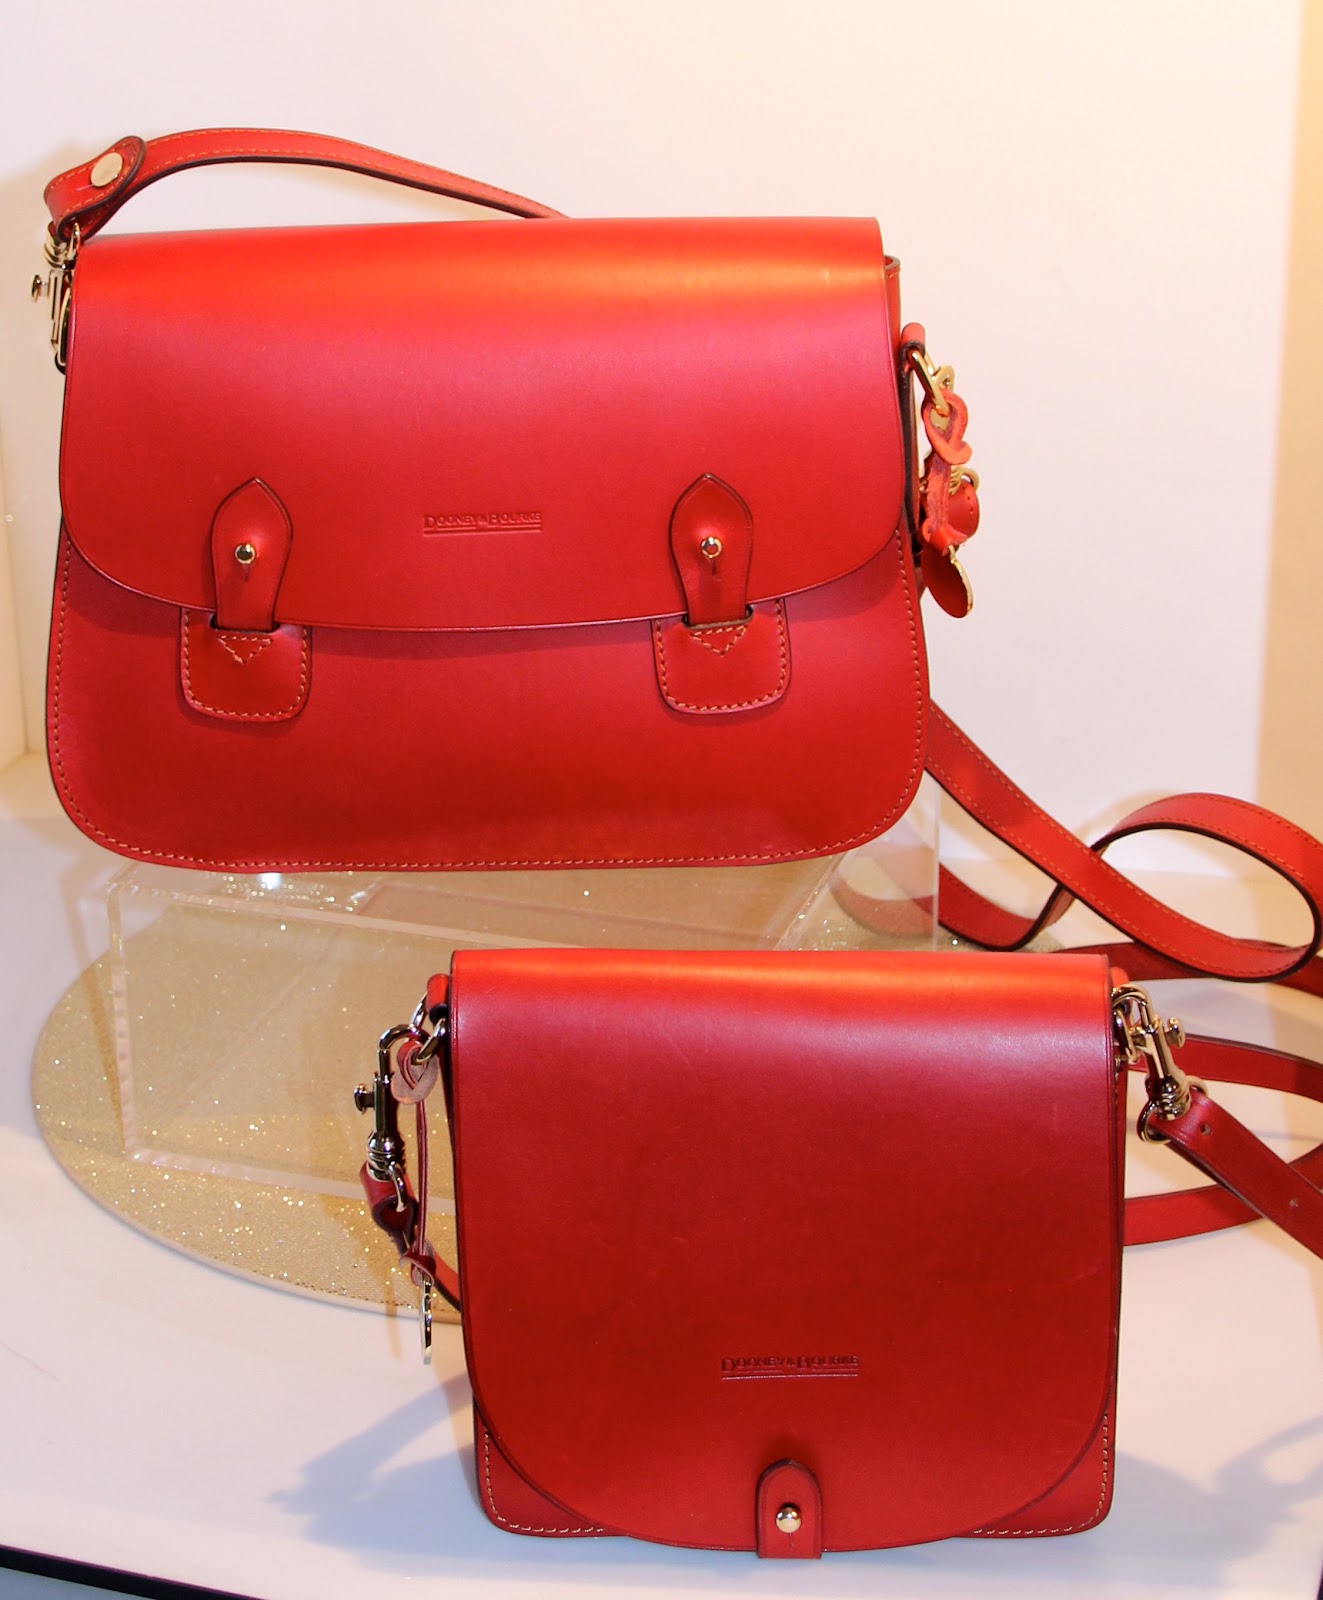 DOONEY + BOURKE SPRING 2013 Handbags, Totes, Accessories